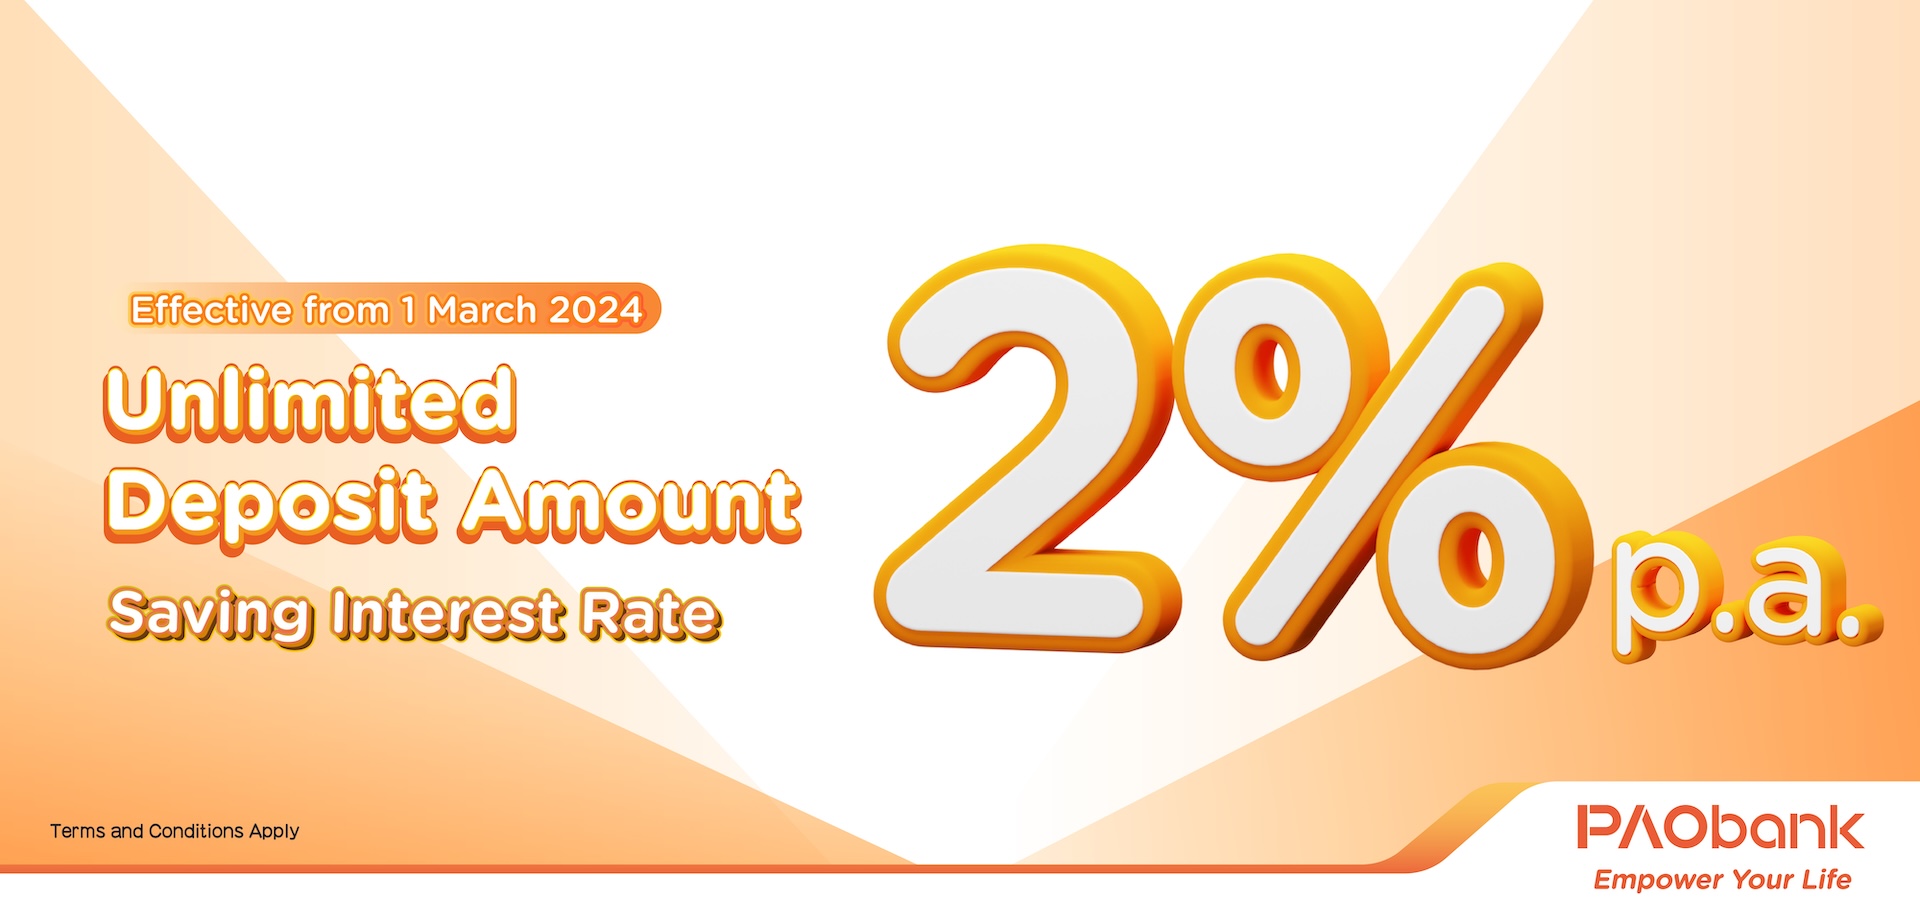 PAObank - Unlimited Deposit Amount